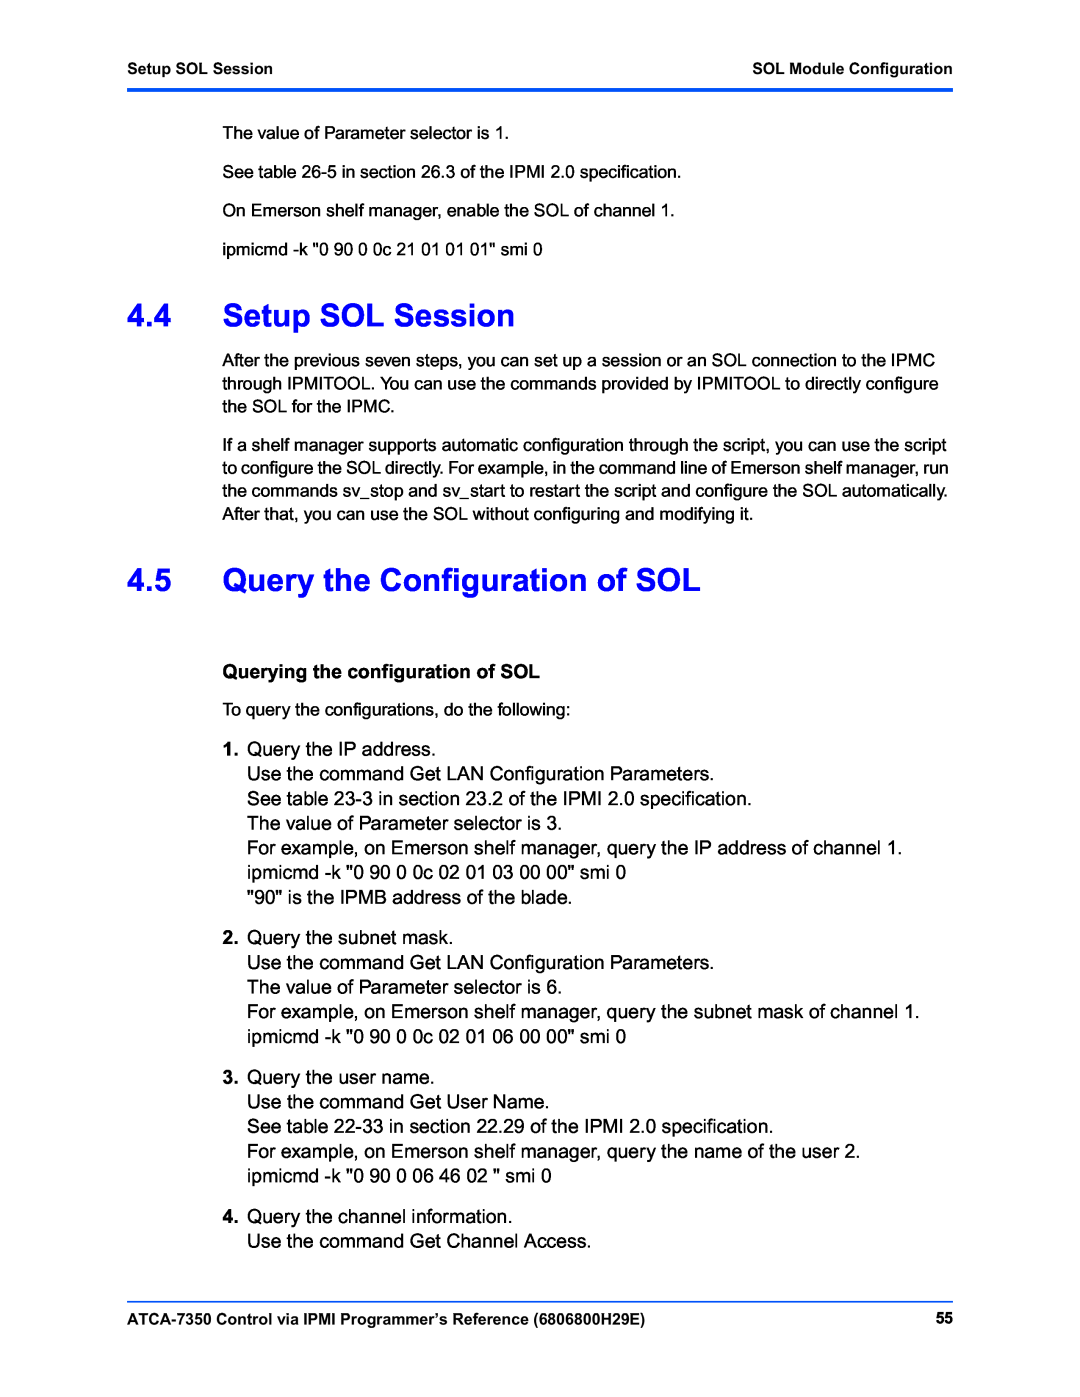 Emerson ATCA-7350 manual 4.4Setup SOL Session, 4.5Query the Configuration of SOL, Querying the configuration of SOL 